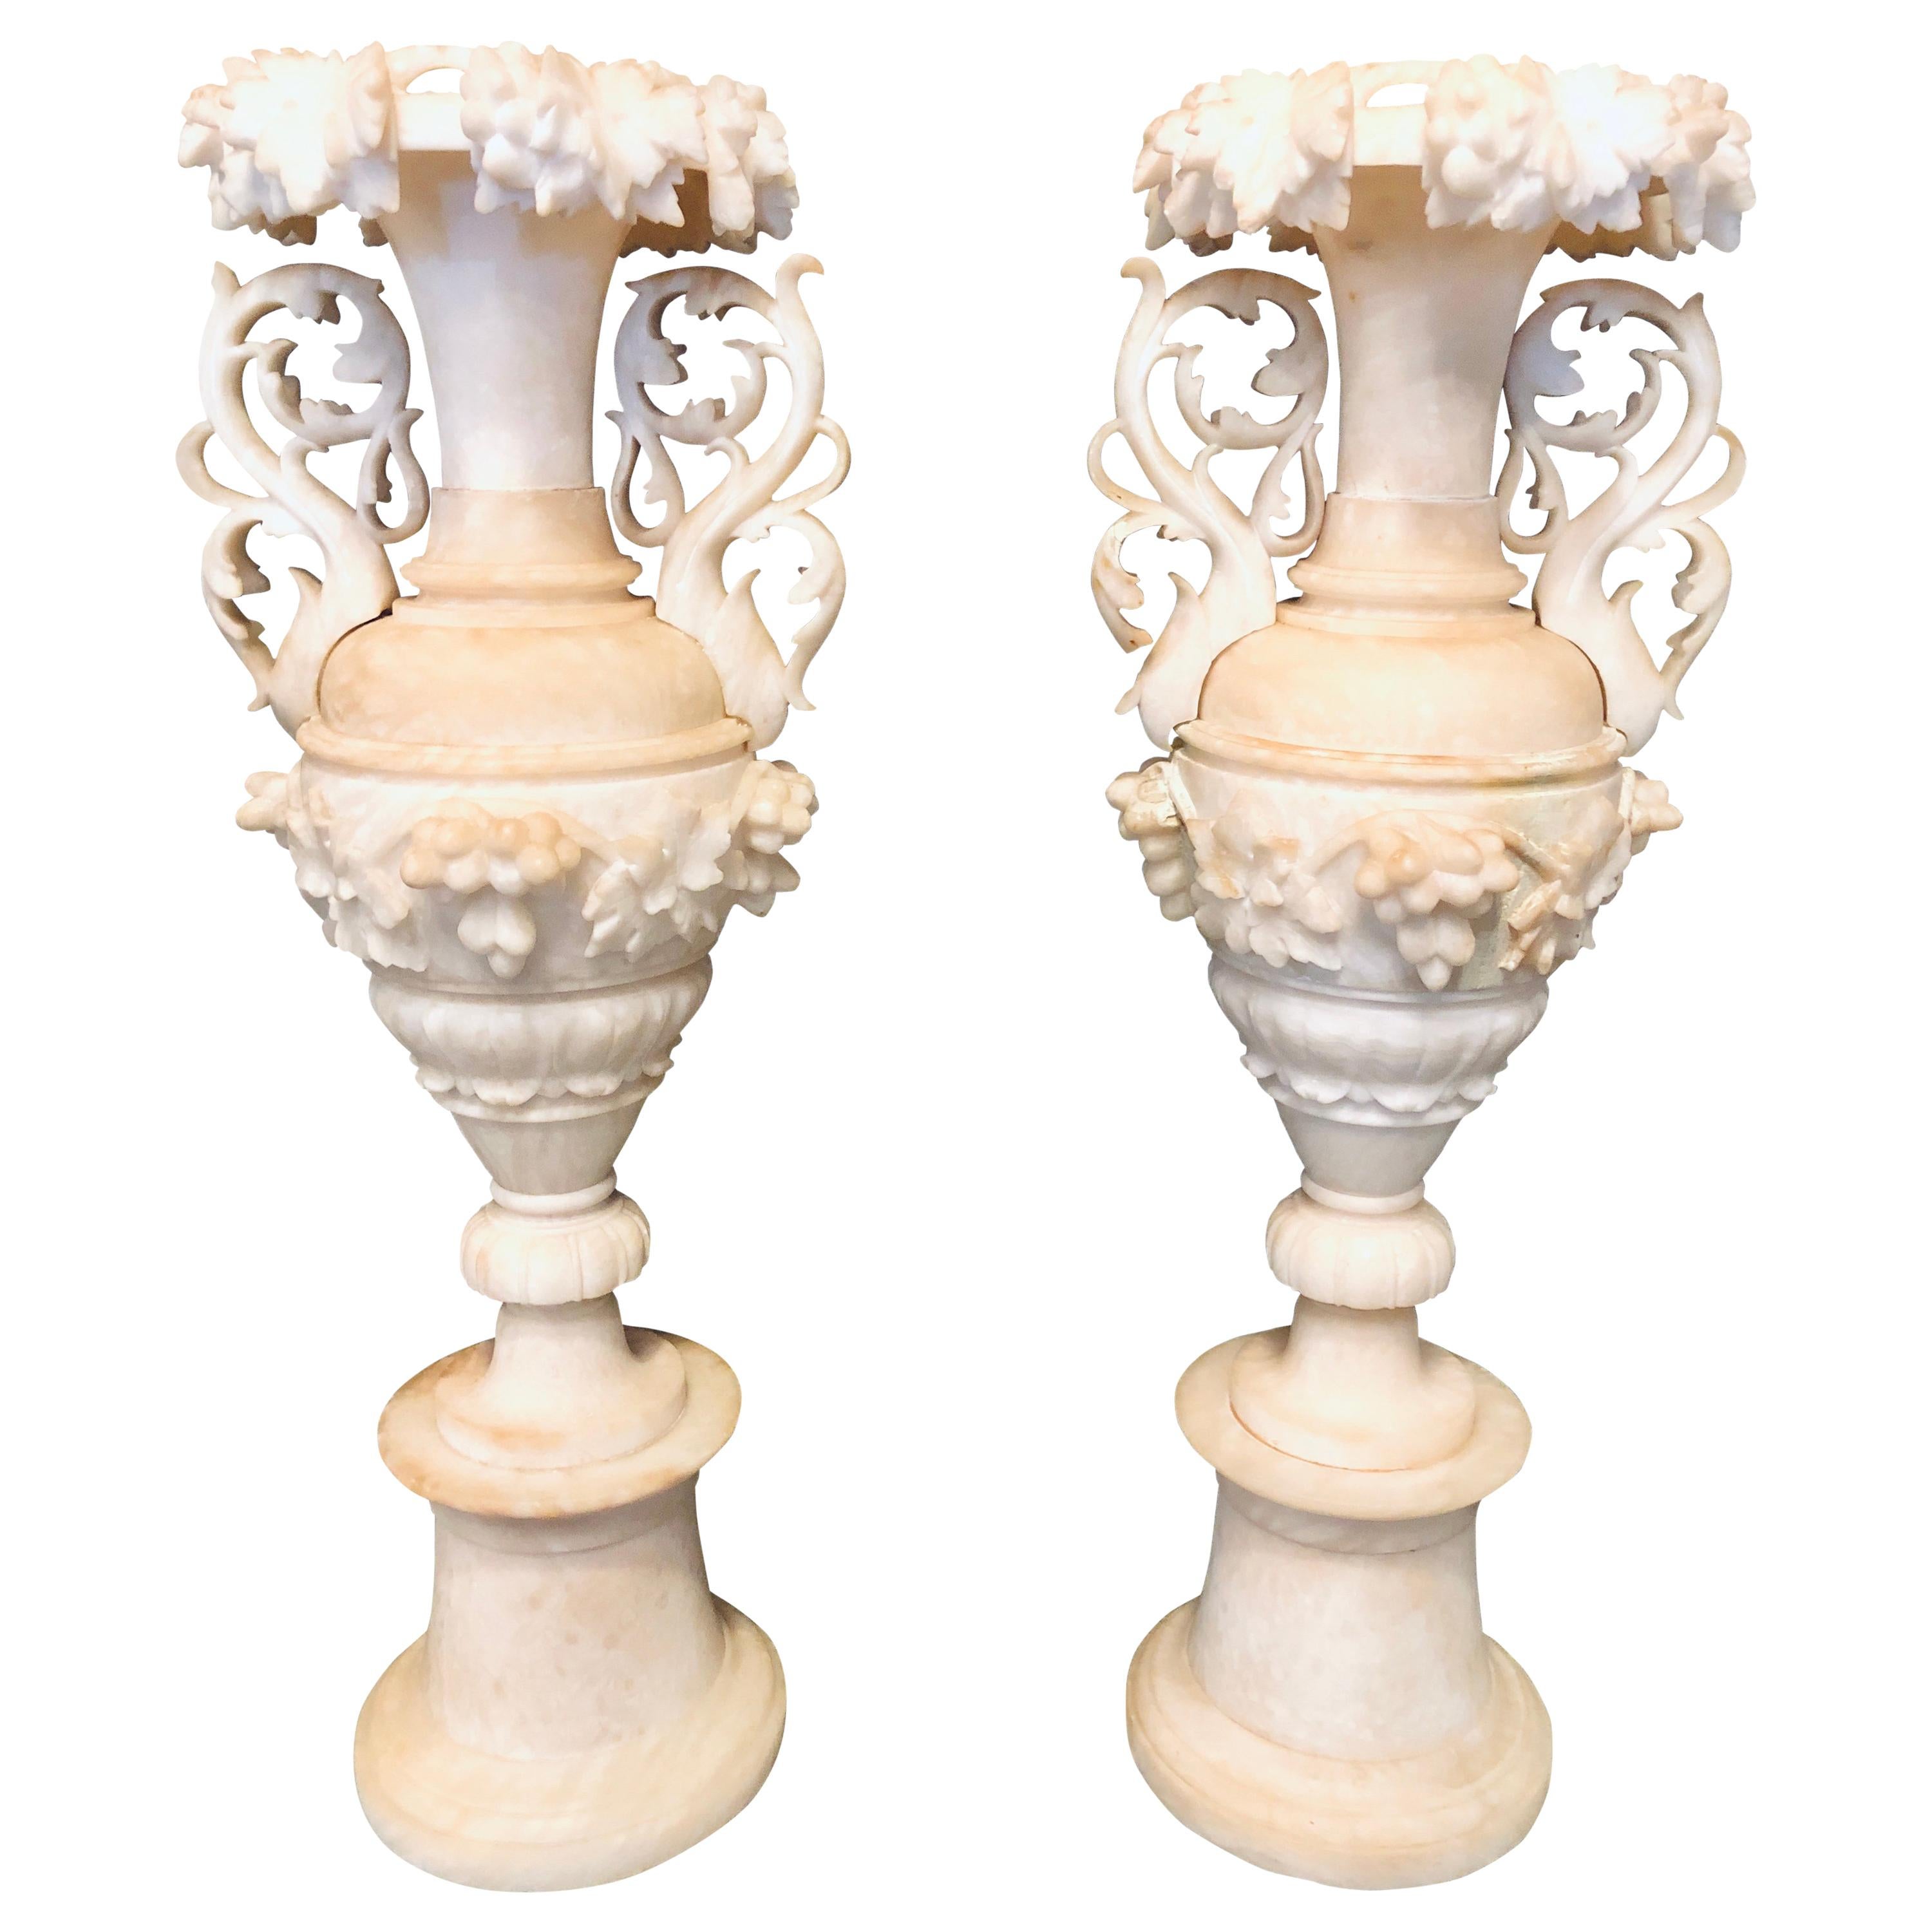 Pair of Neoclassical 19th Century Alabaster Three-Piece Urns or Vases